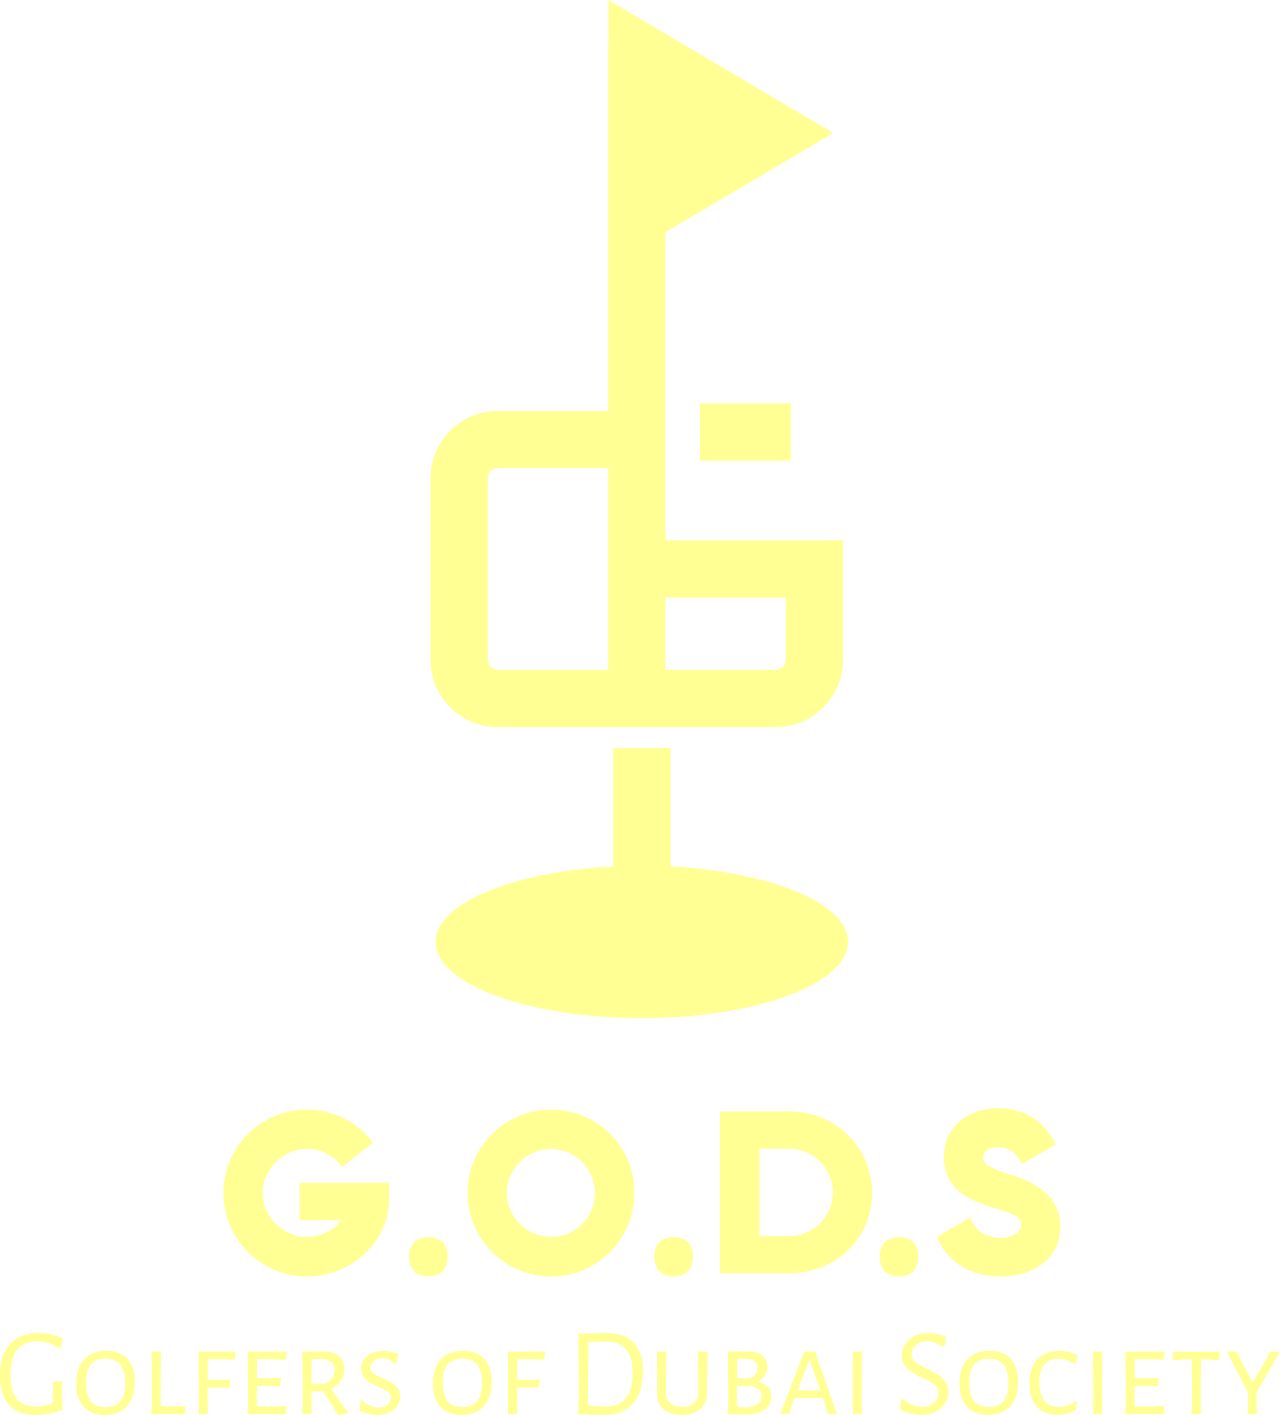 G.O.D.S's logo